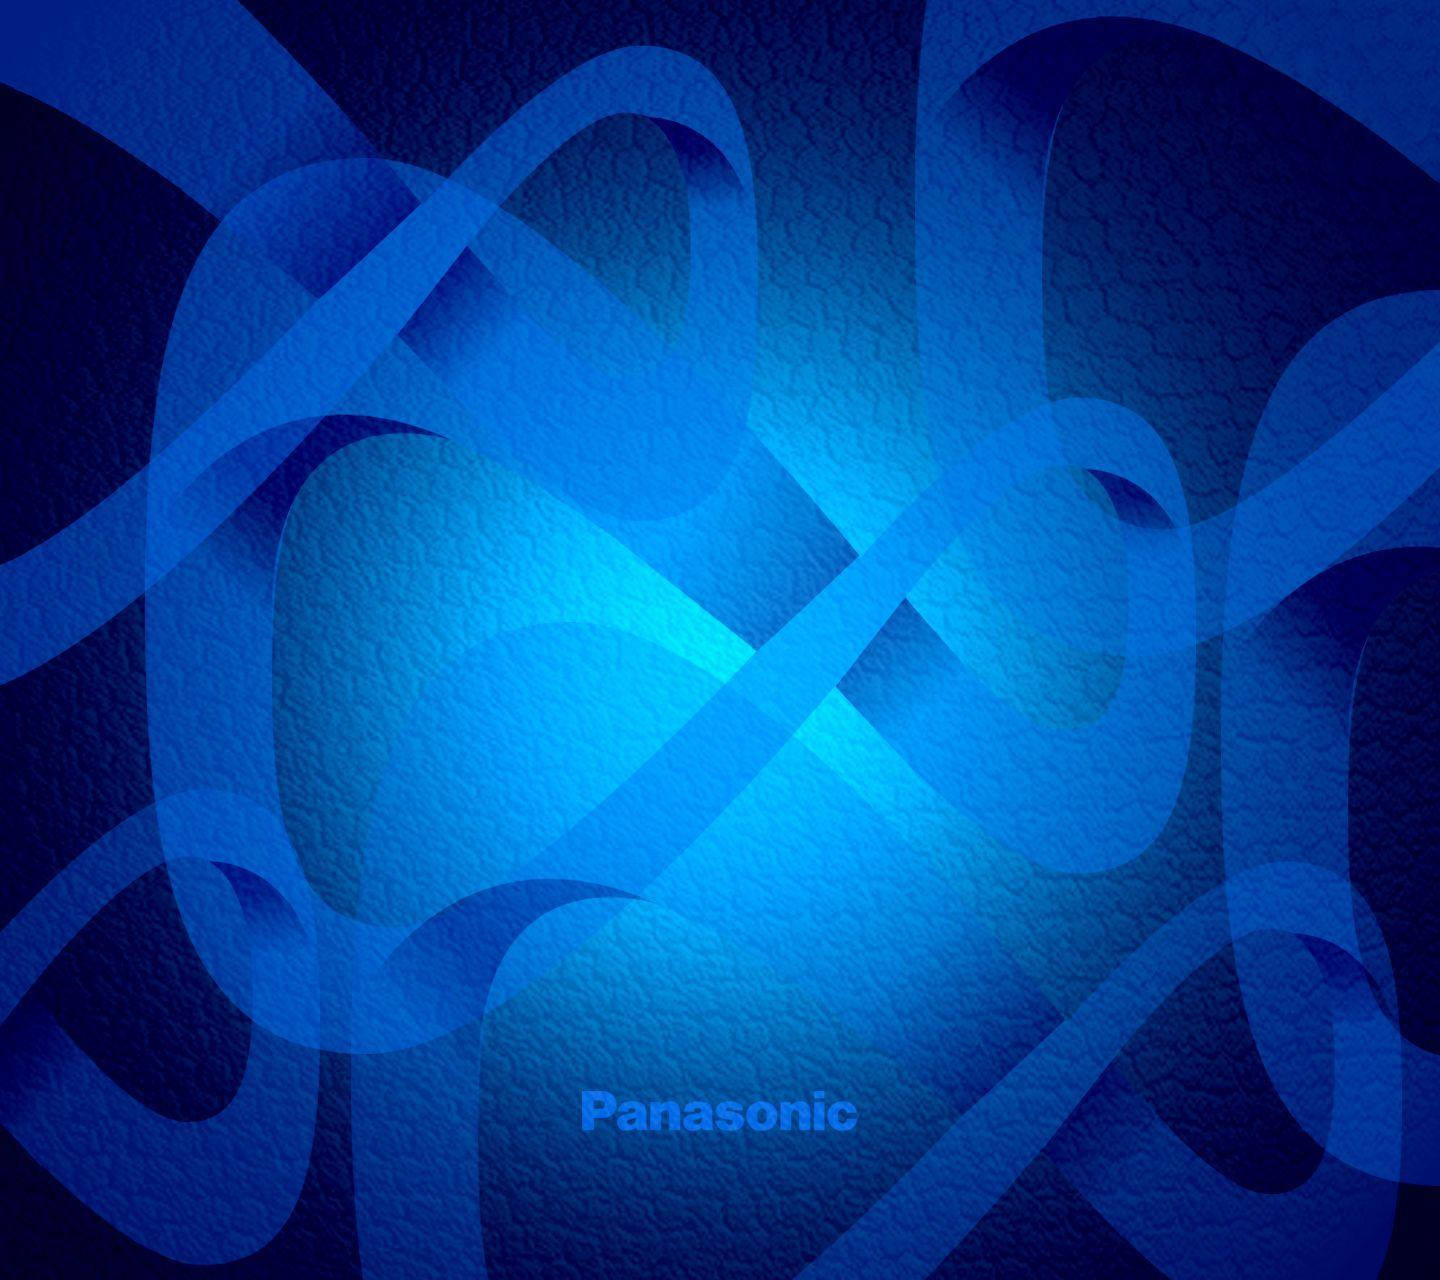 Panasonic Blue Abstract Wallpaper